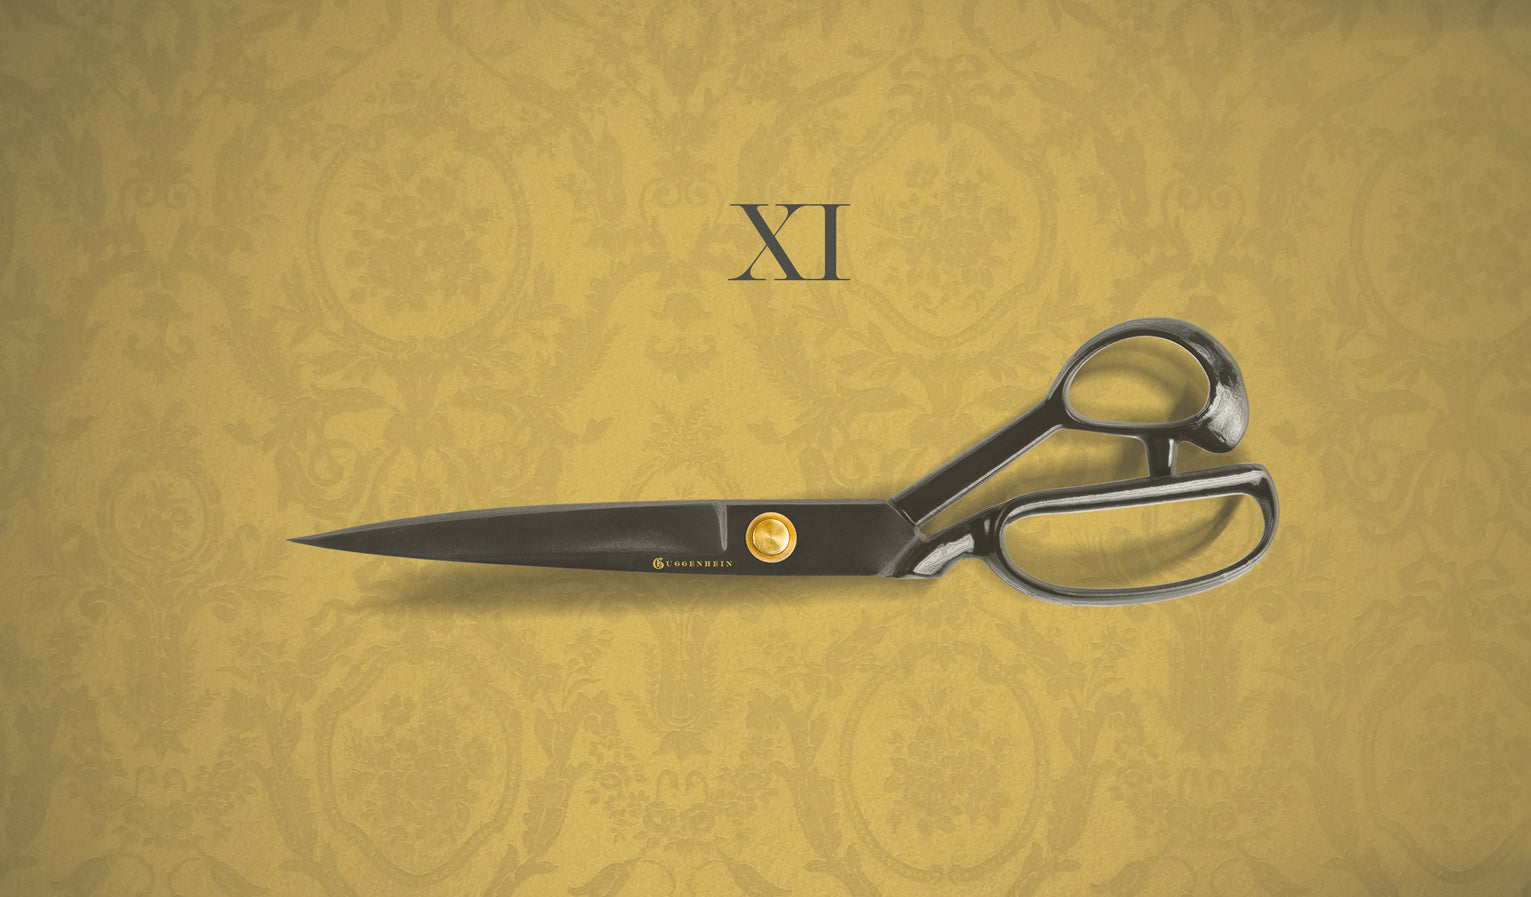 Guggenhein VII 7 Scissors 